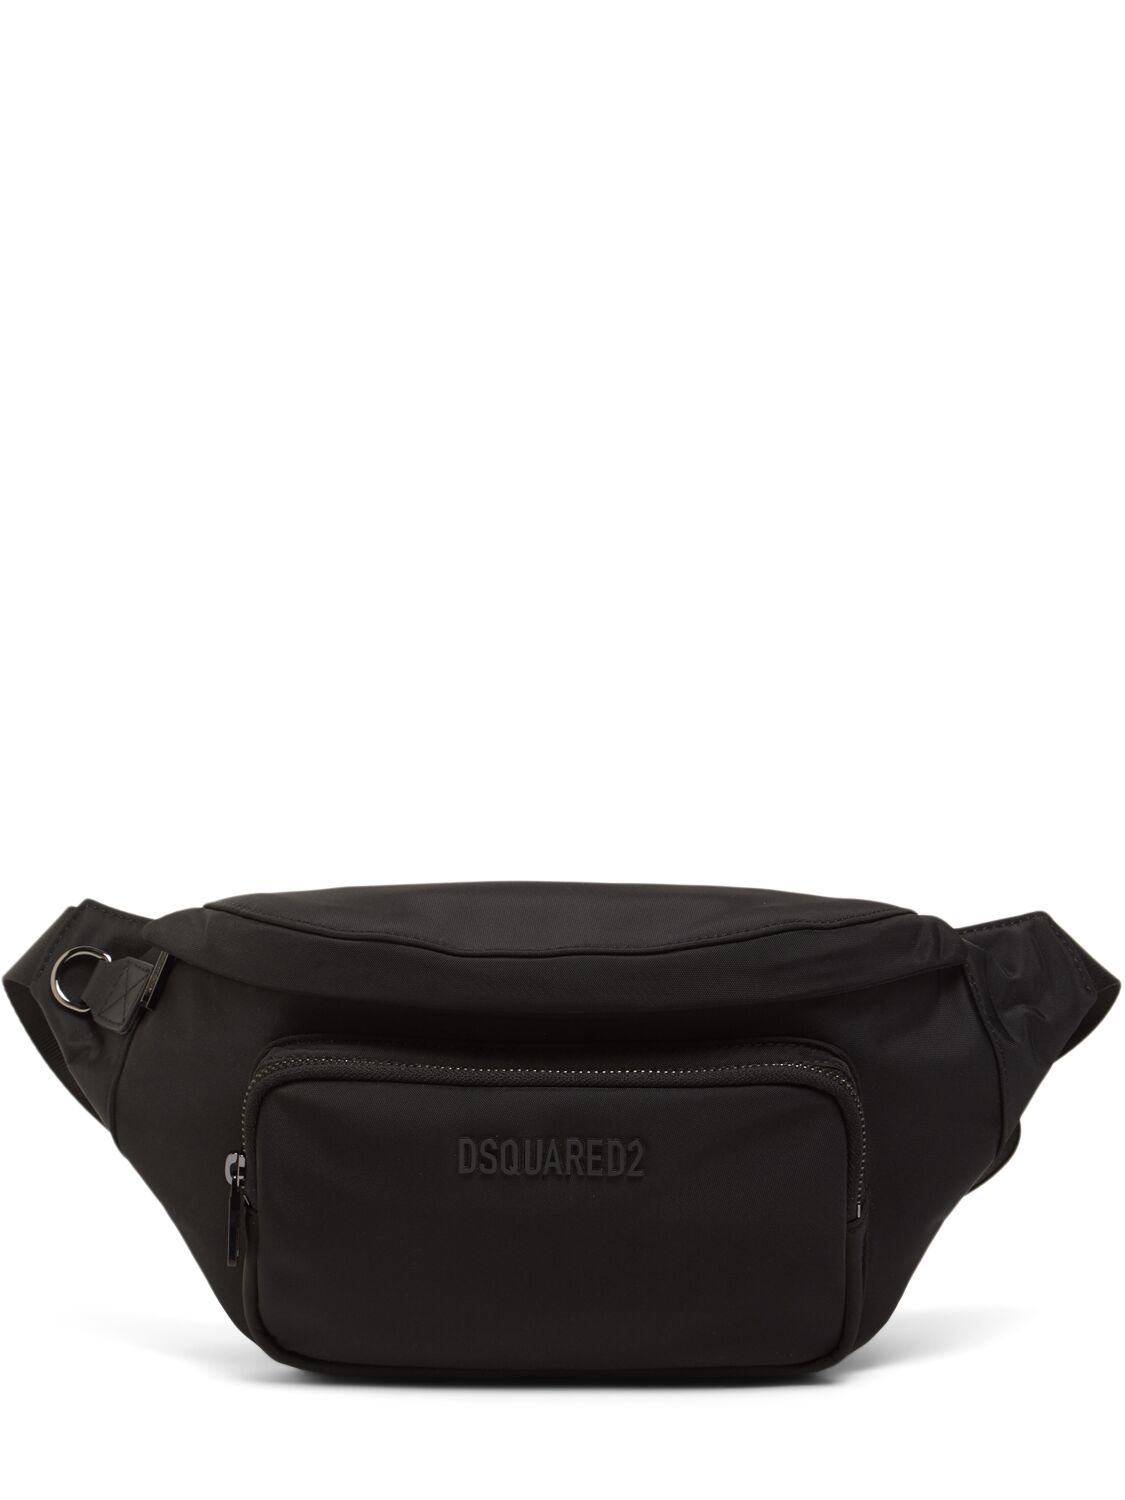 Dsquared2 Urban Logo Tech Belt Bag In Black